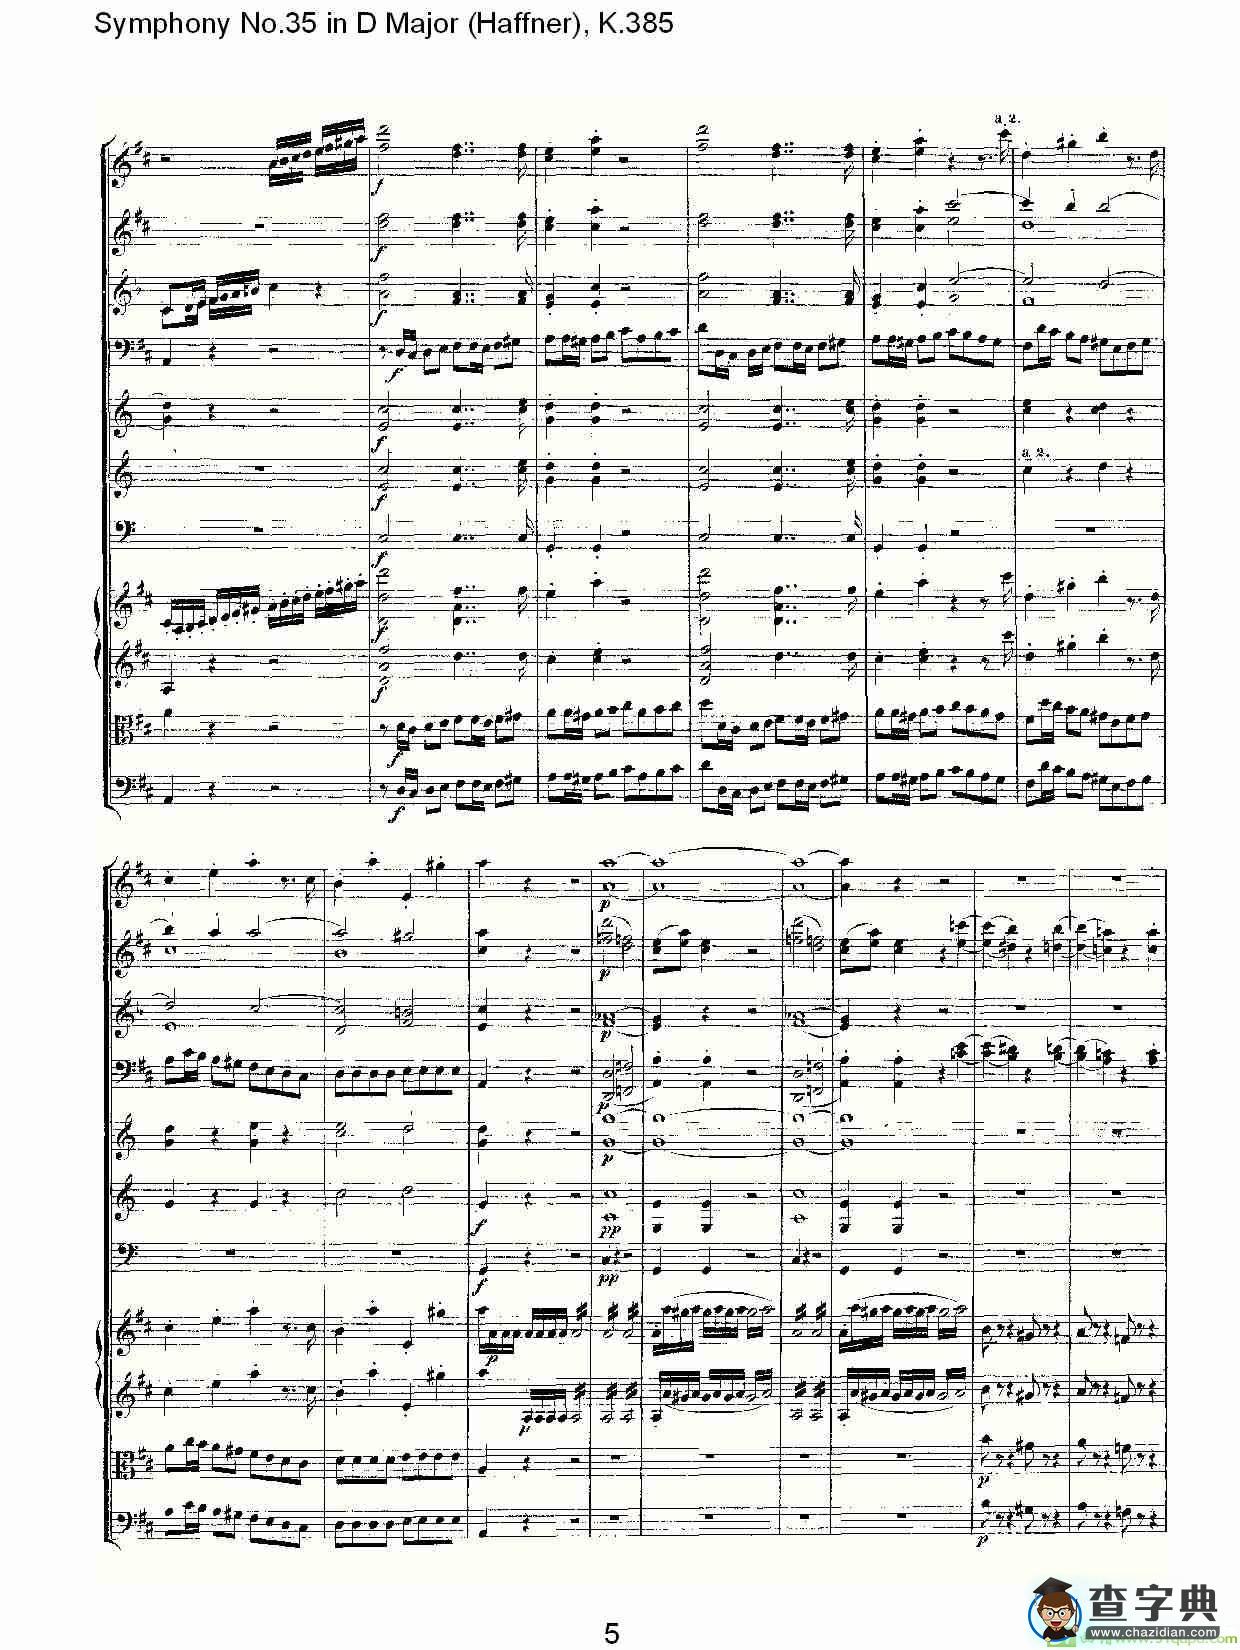 Symphony No.35 in D Major, K.385简谱